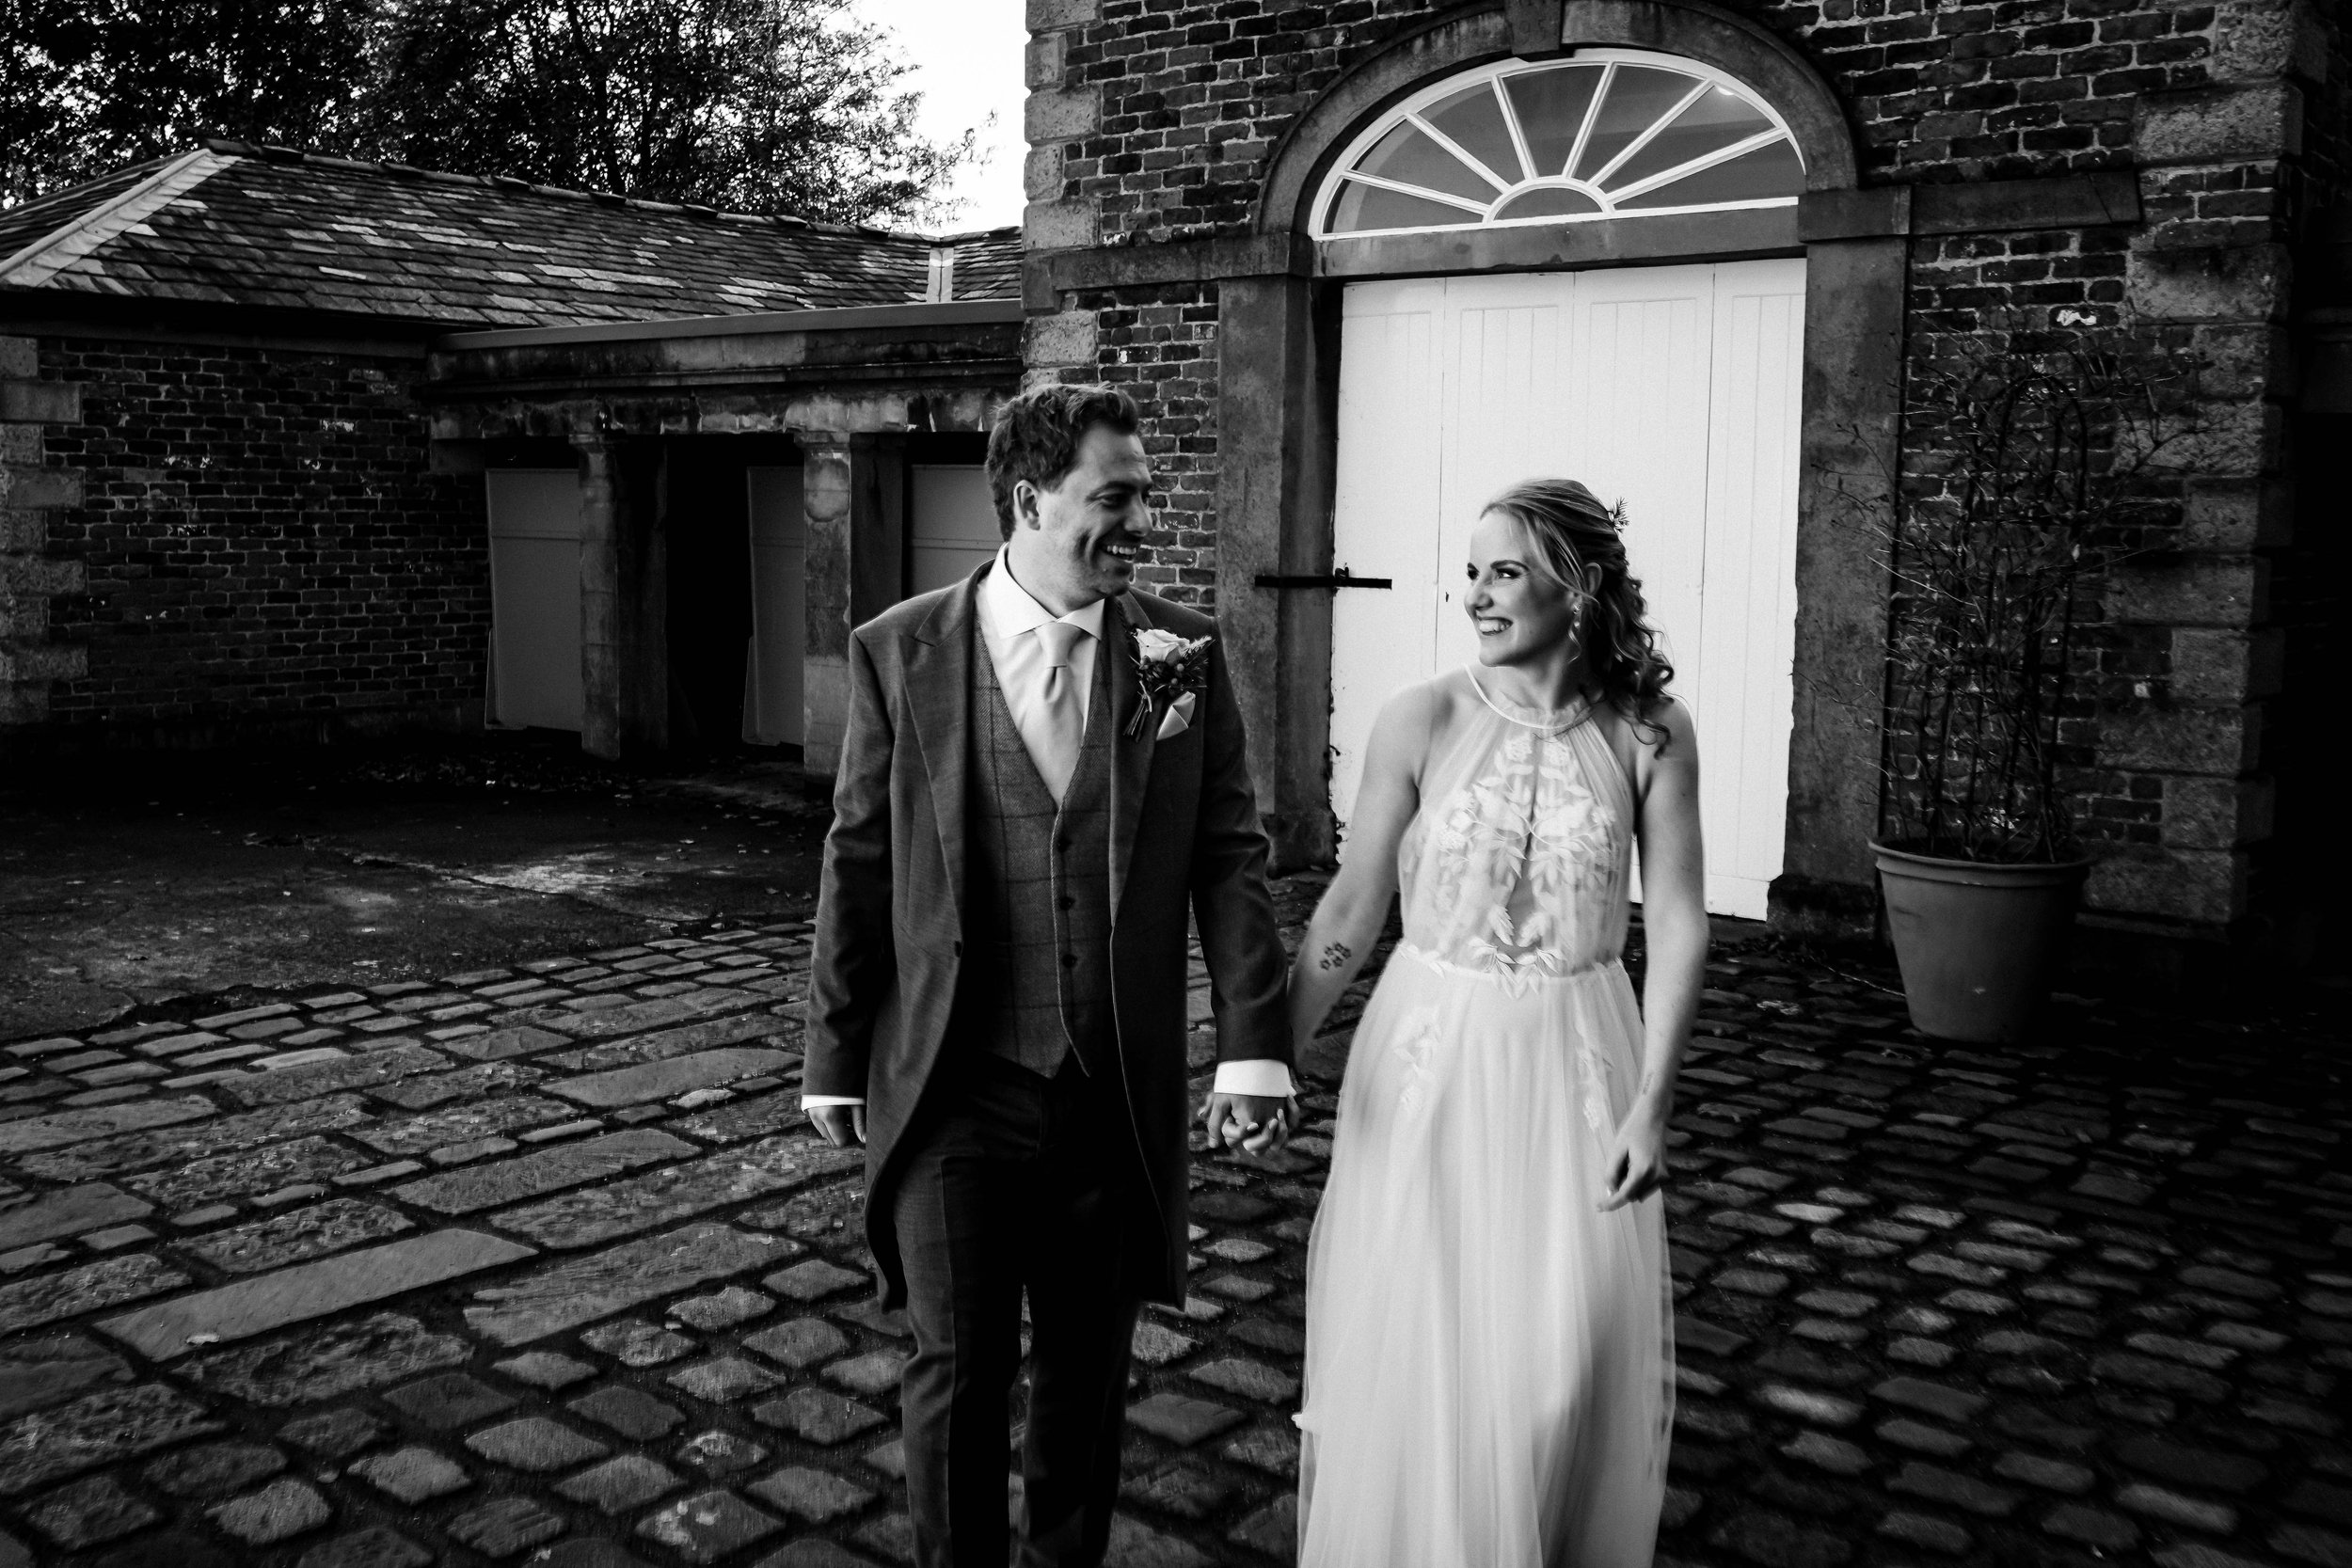 Meols Hall Wedding Photographer based in Lancashire North West England photography - 032.jpg